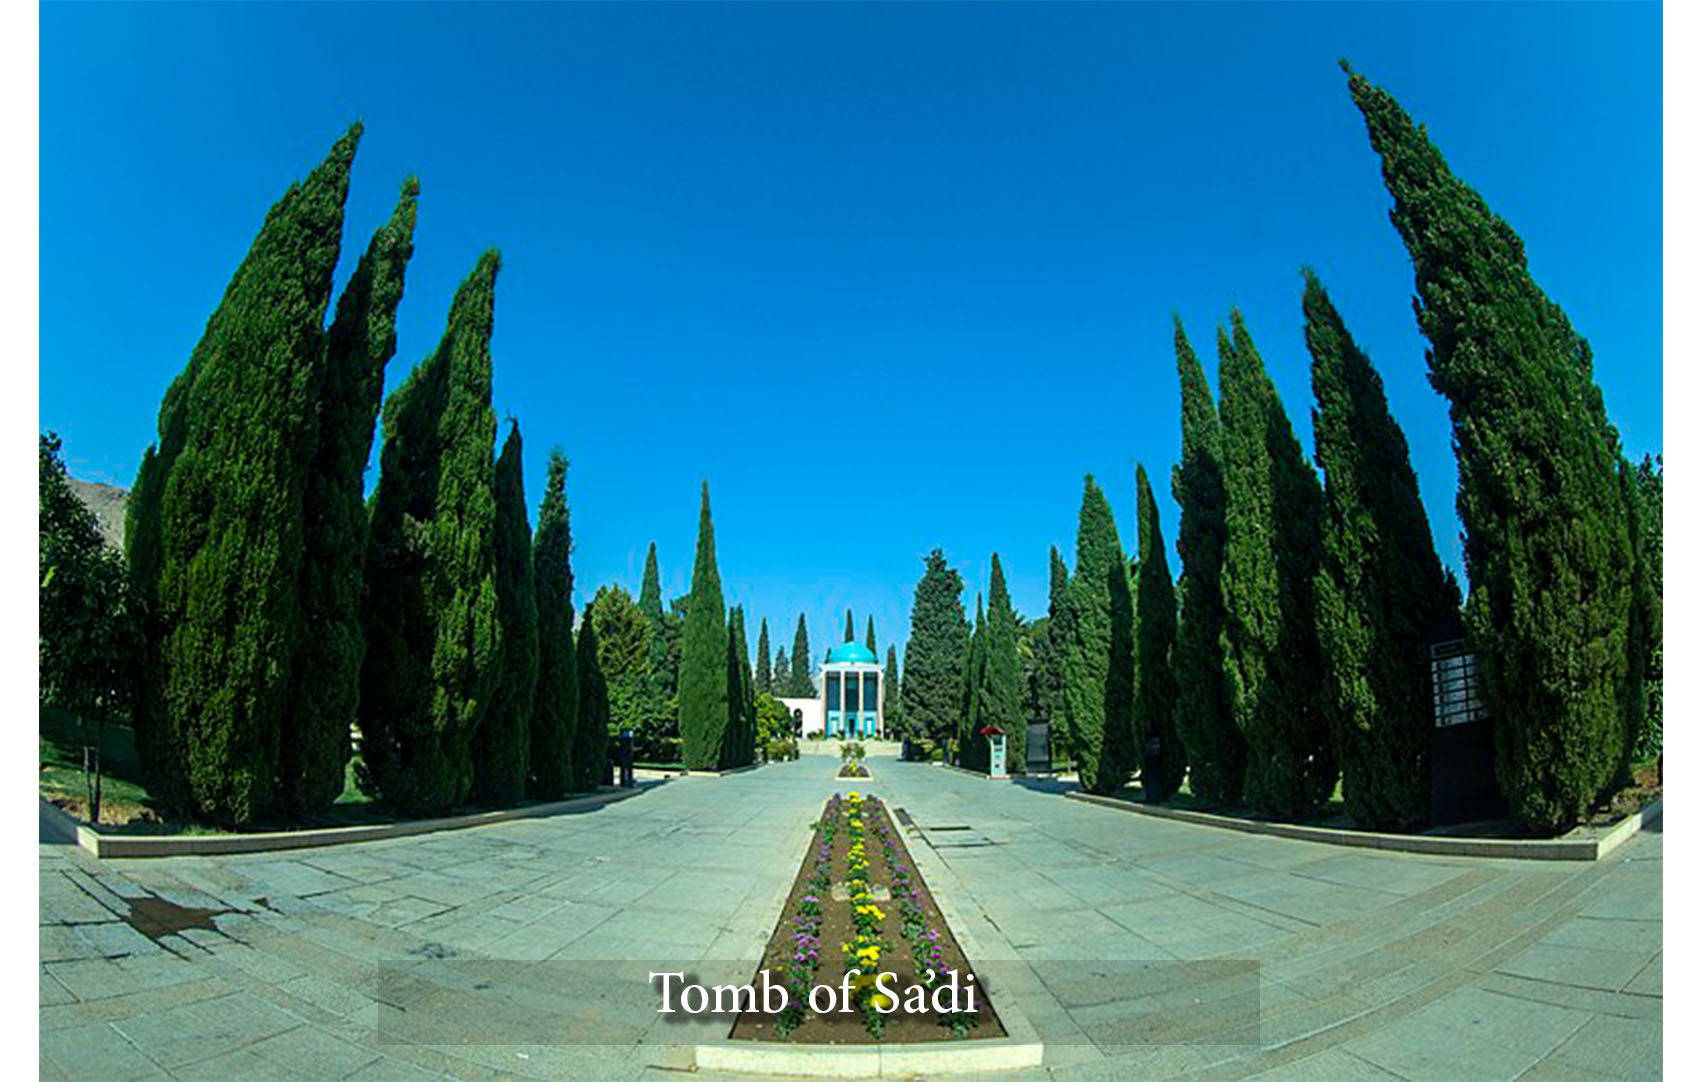 Tomb of Saadi in shiraz